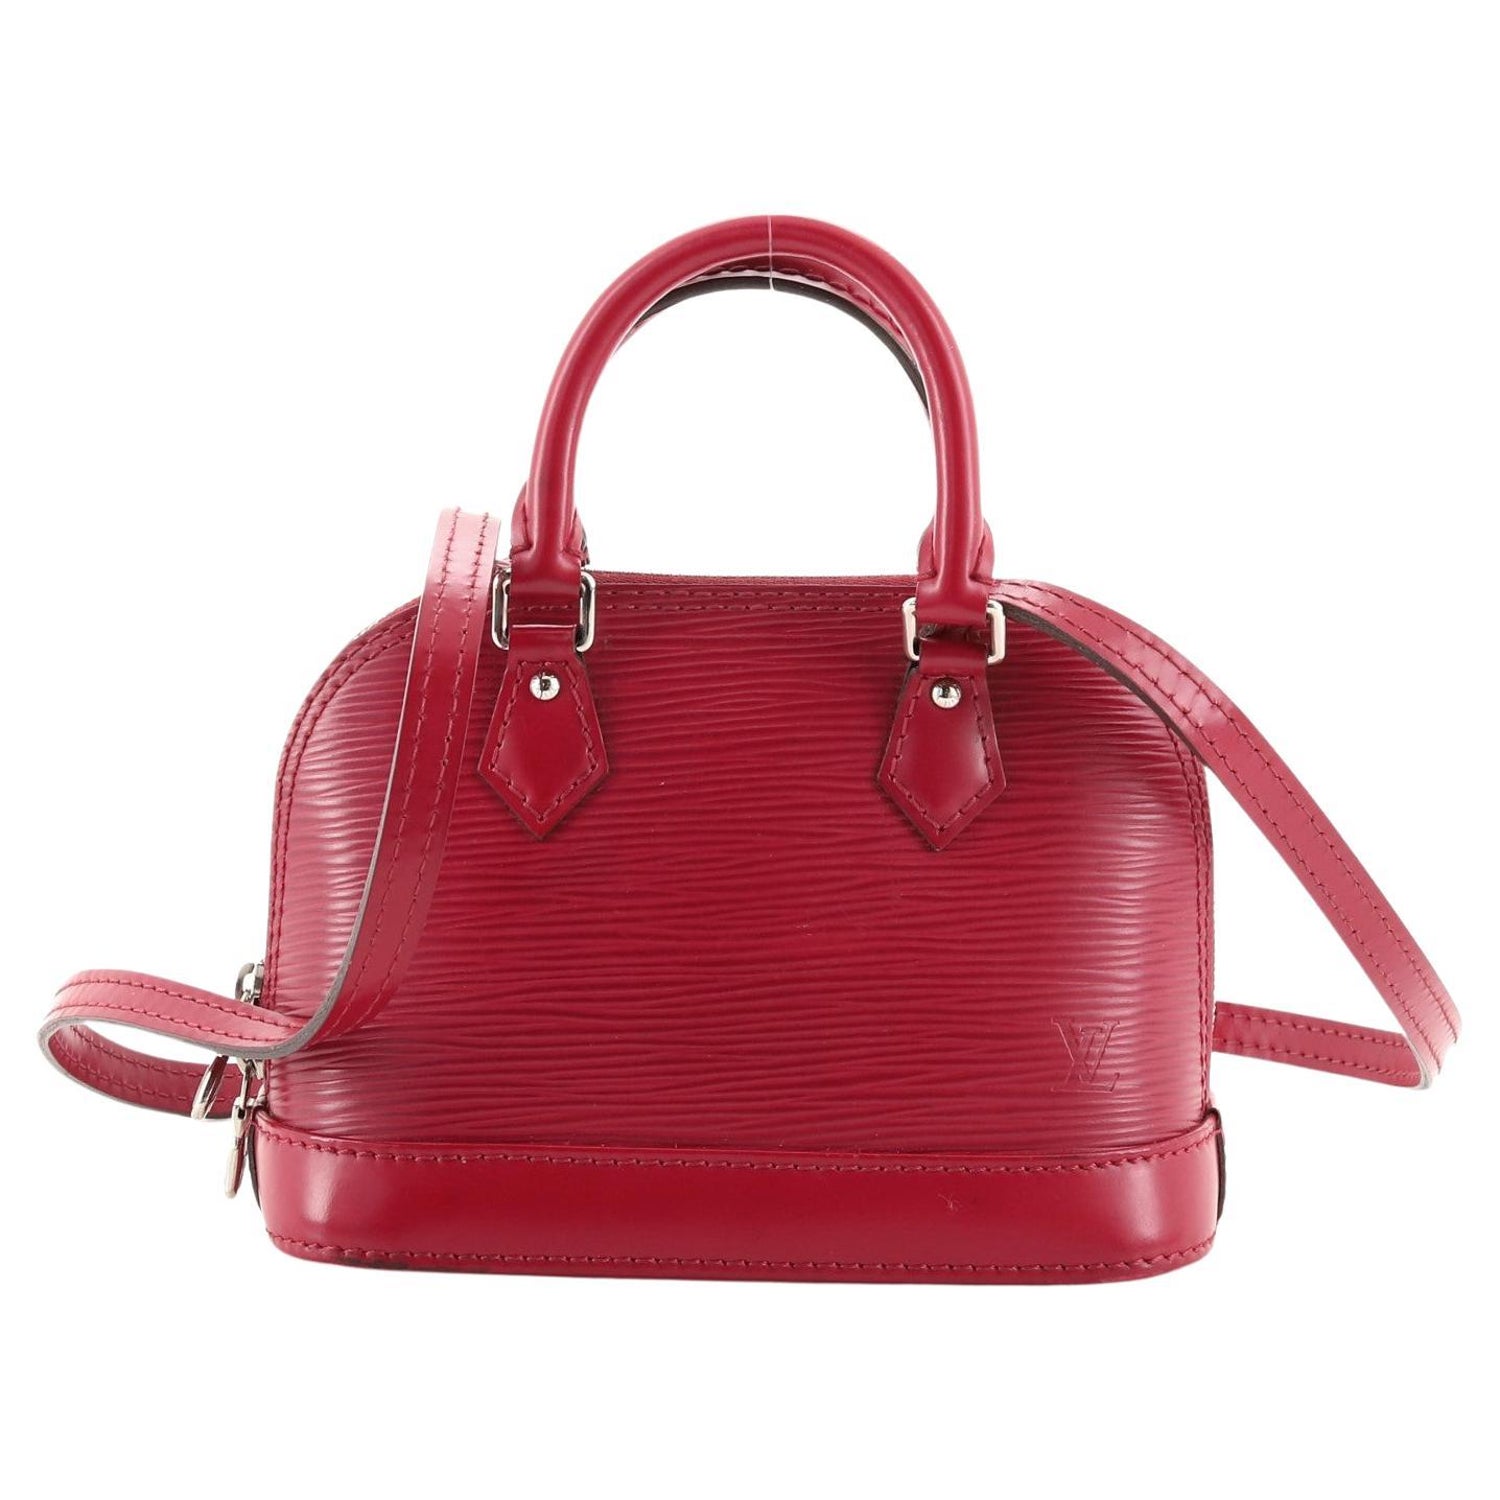 HOT NEW Louis Vuitton handbags - LV NANO ALMA, Hide & Seek and